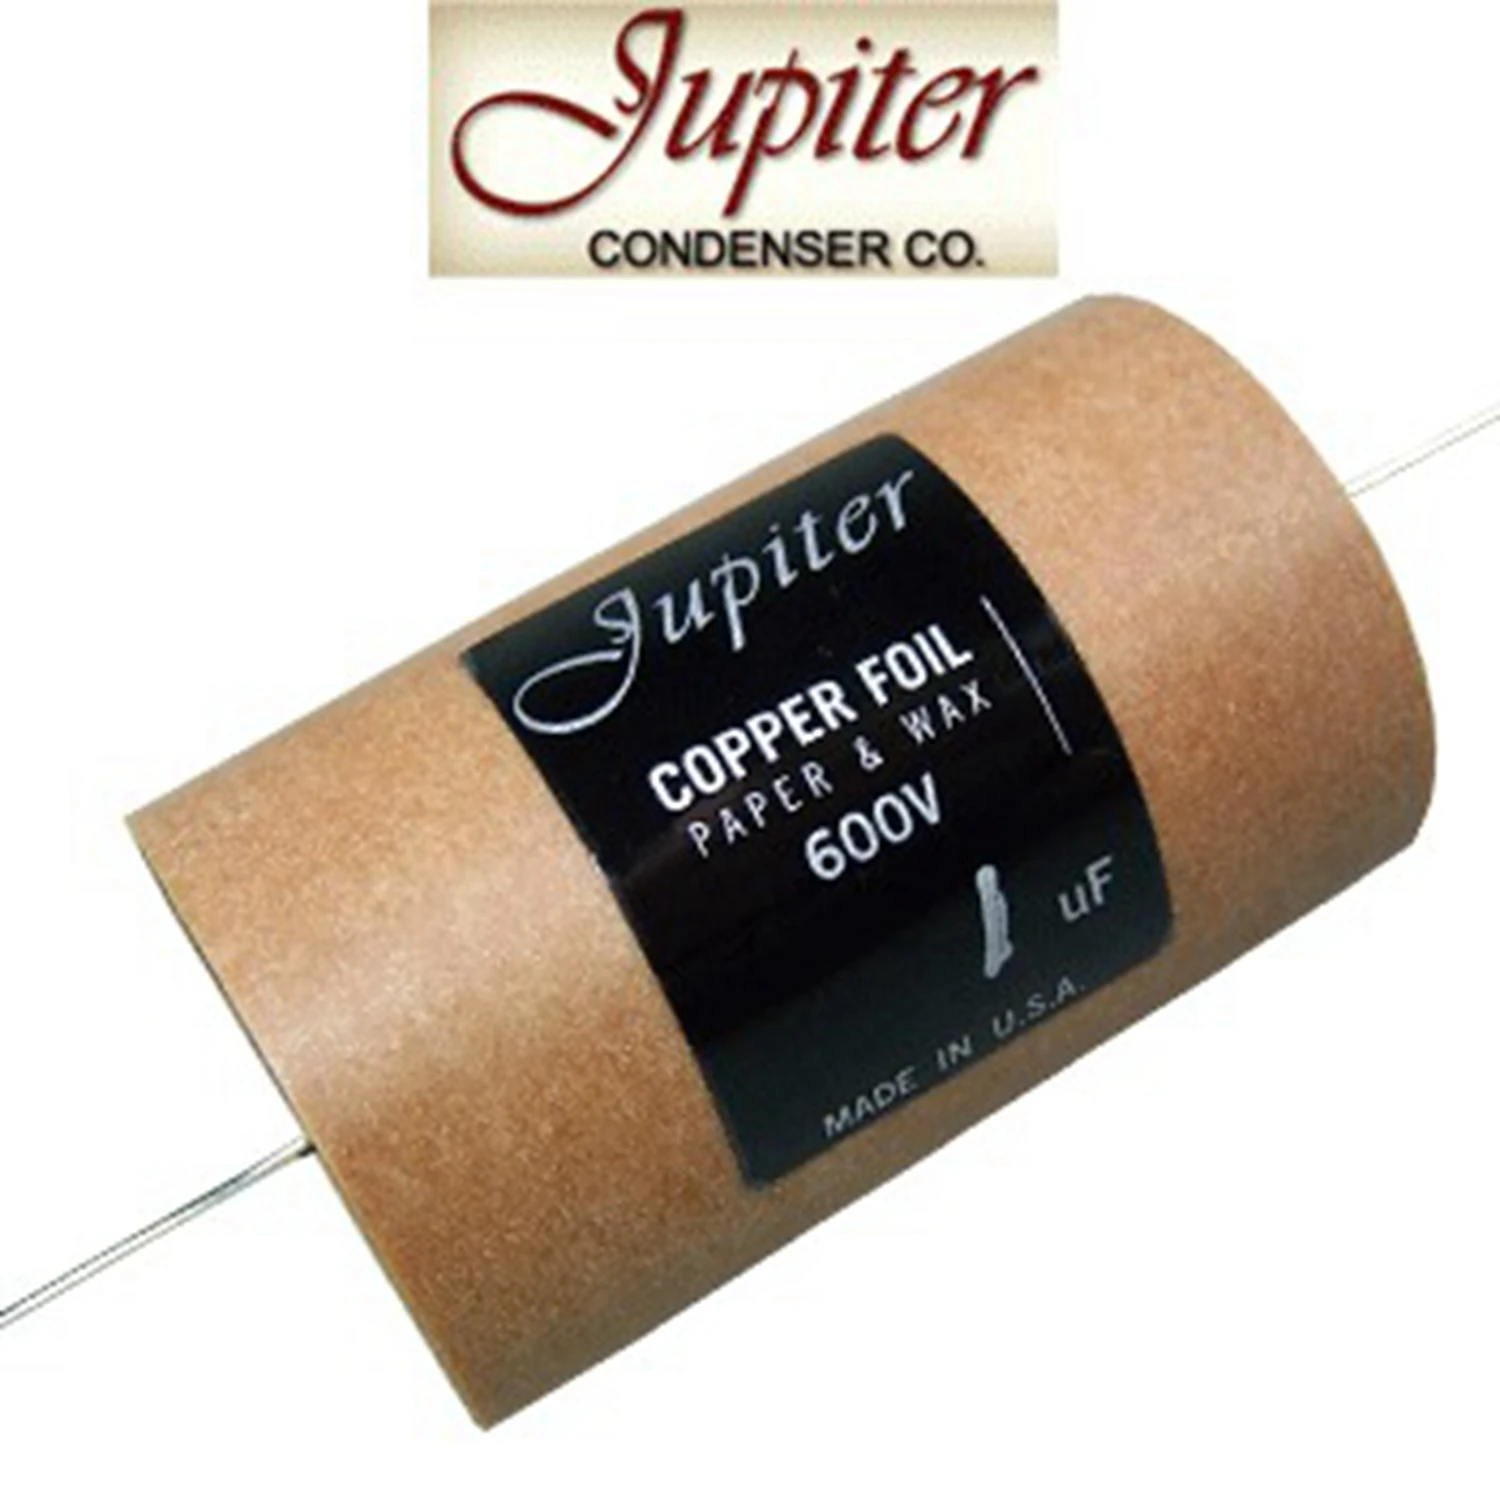 1pcs Original American jupiter Copper Foil Paper & Wax Capacitors series 5% 80C 100V/400V/600V Audio capacitor free shipping 1pcs sj 72 10kv 100v pointer voltmeter sq 72 jy 72 cp 72 89t2 72mmx72mm